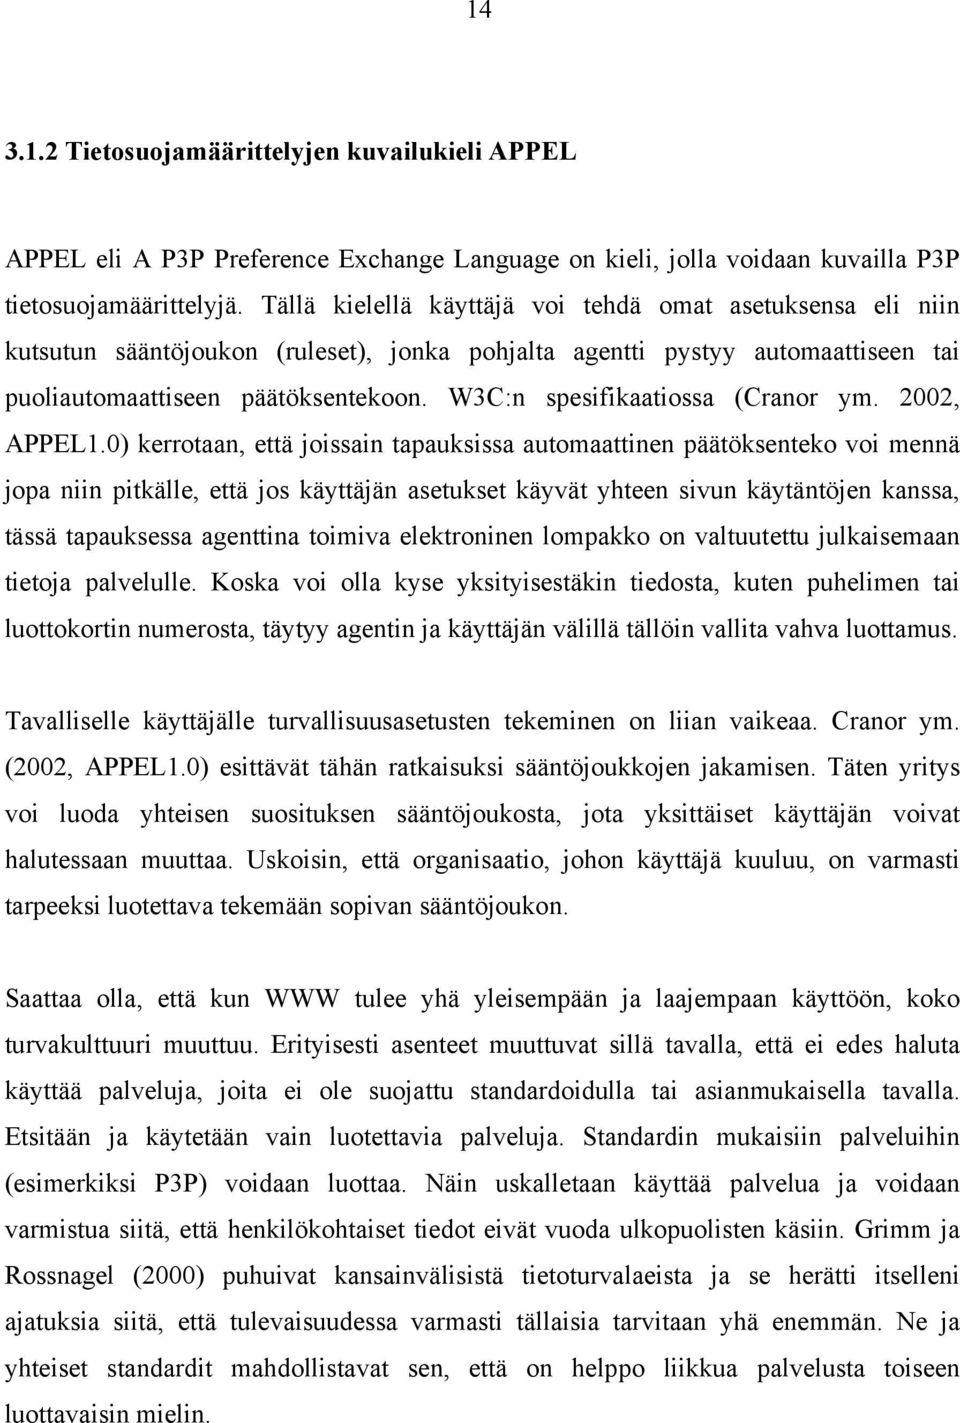 W3C:n spesifikaatiossa (Cranor ym. 2002, APPEL1.